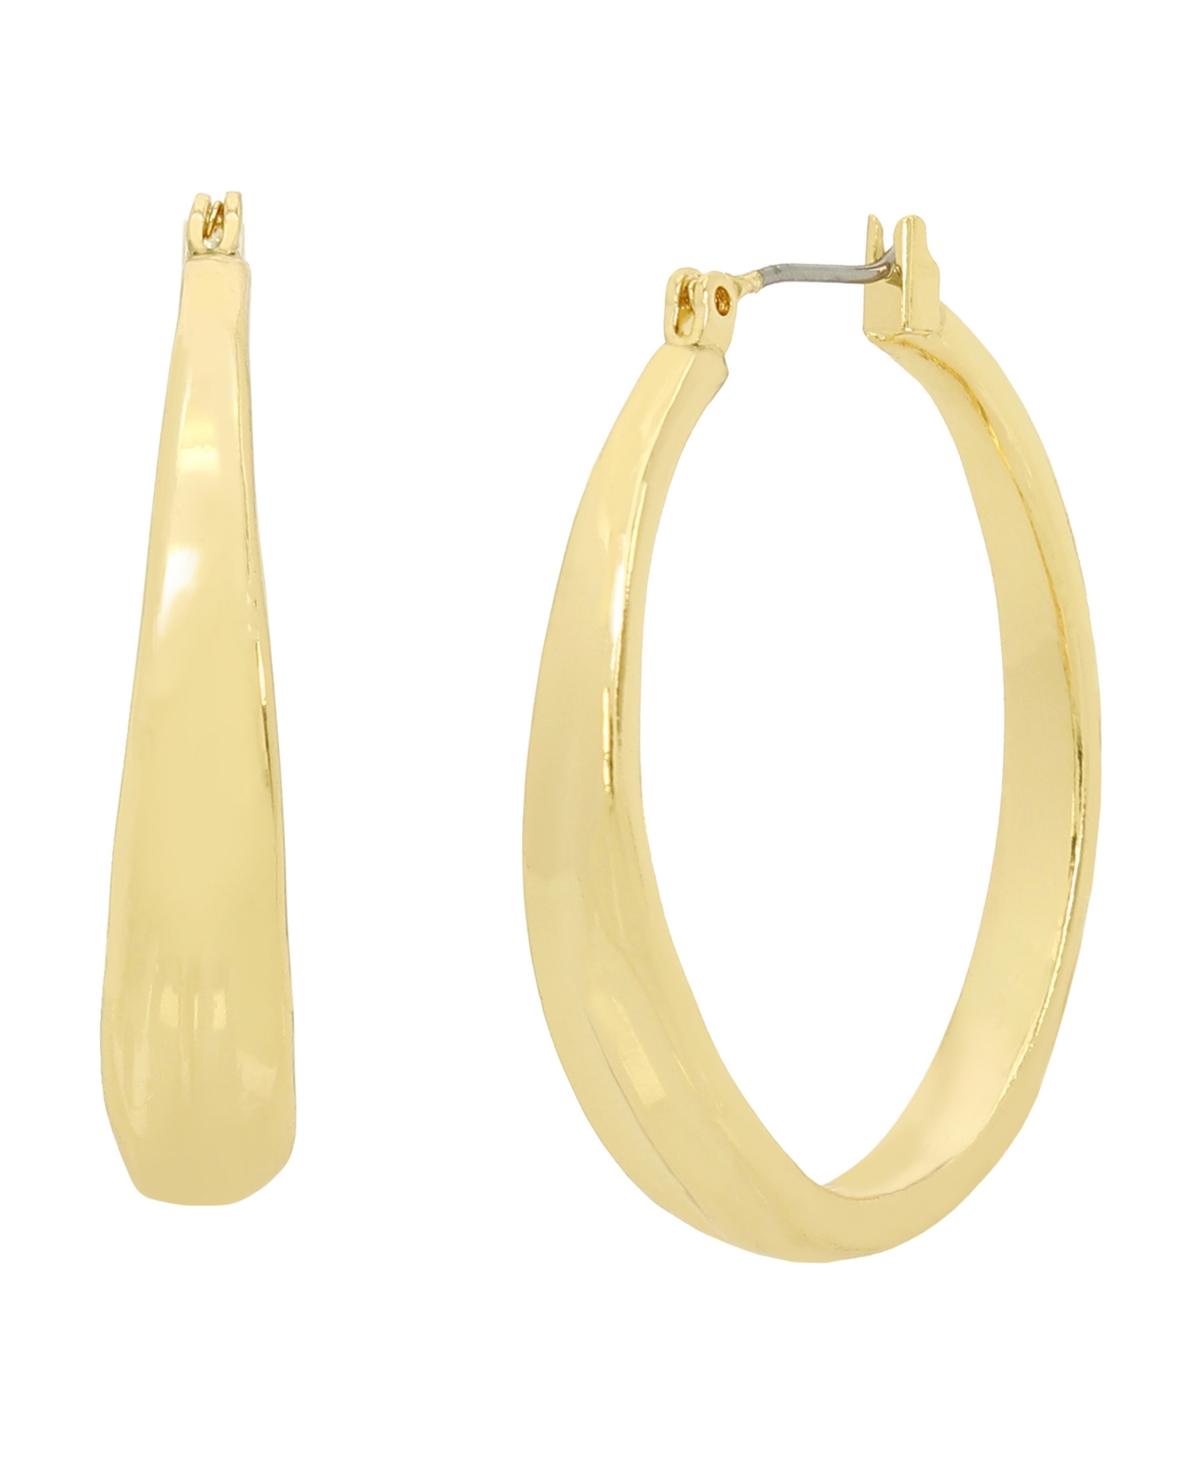 Gold Textured Hoop Earrings - Gold